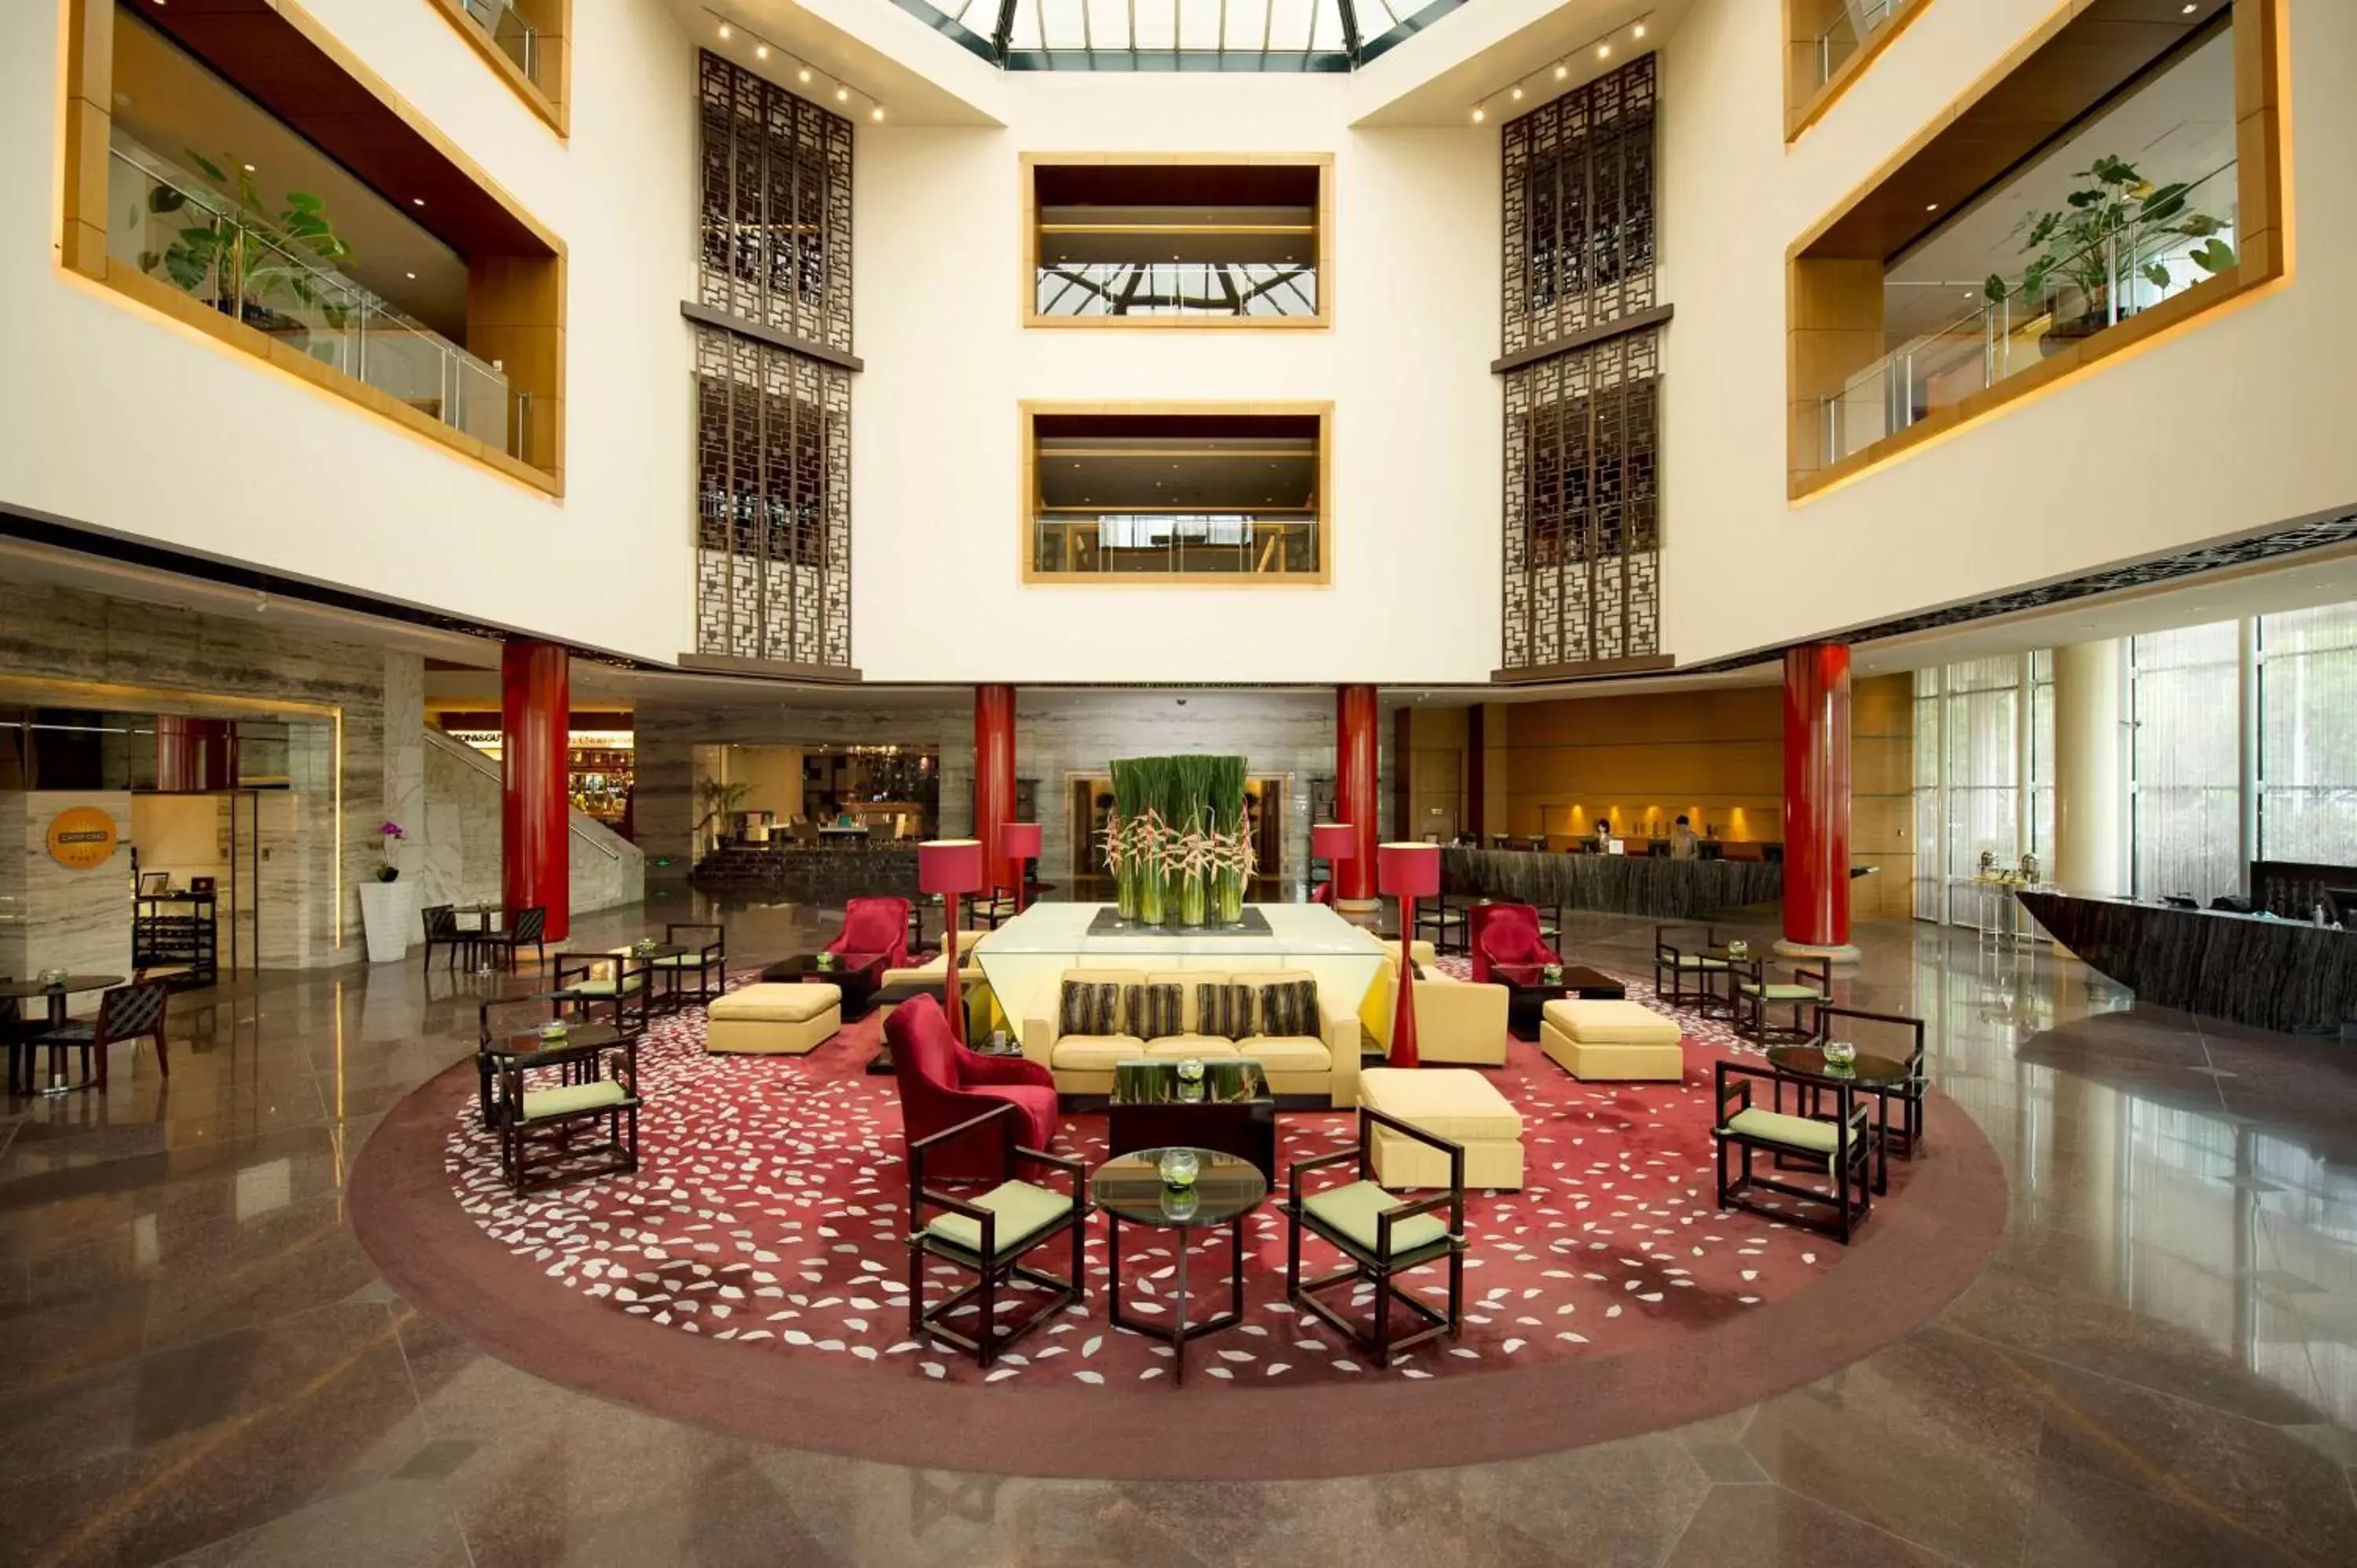 Lobby or reception in Hilton Beijing Hotel